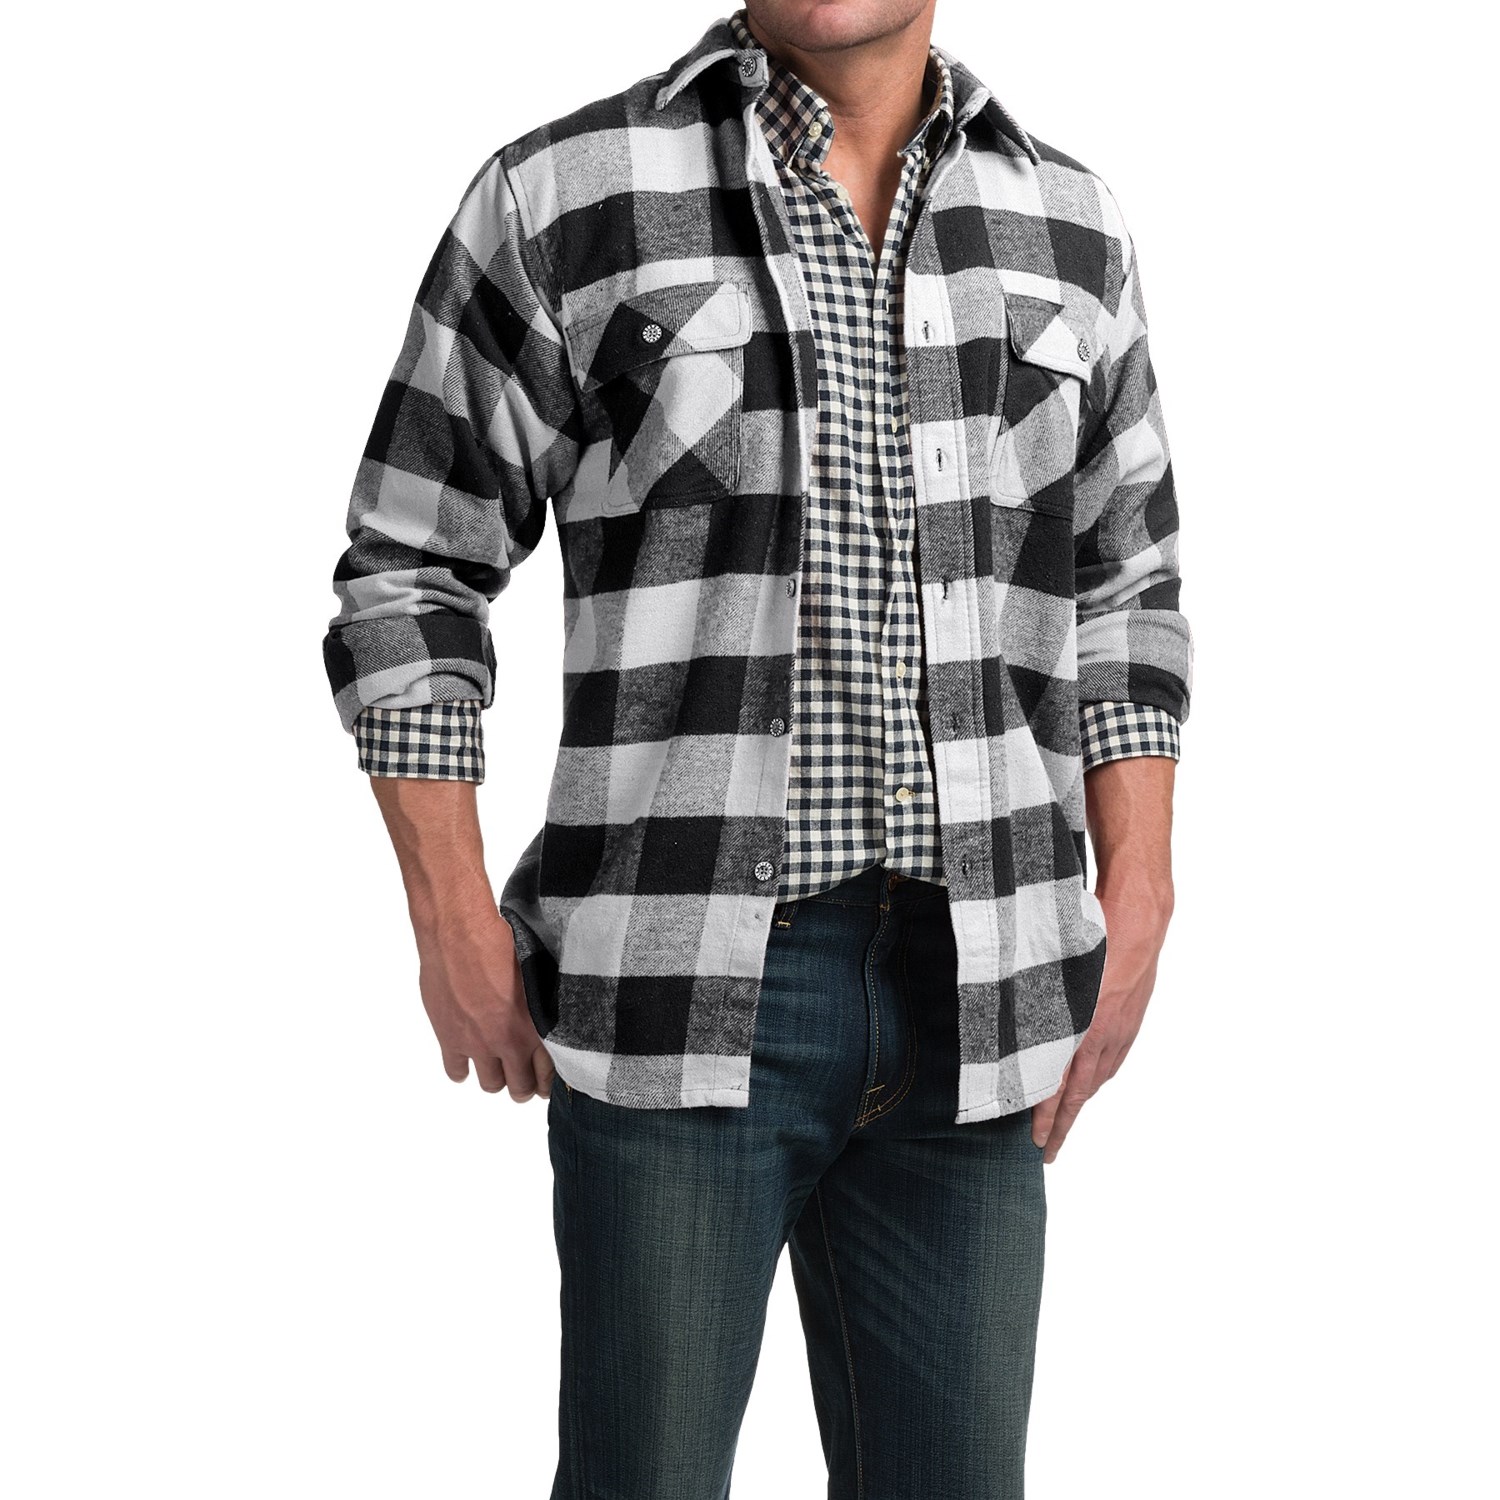 Moose Creek Brawny Plaid Flannel Shirt (For Tall Men) - Save 40%